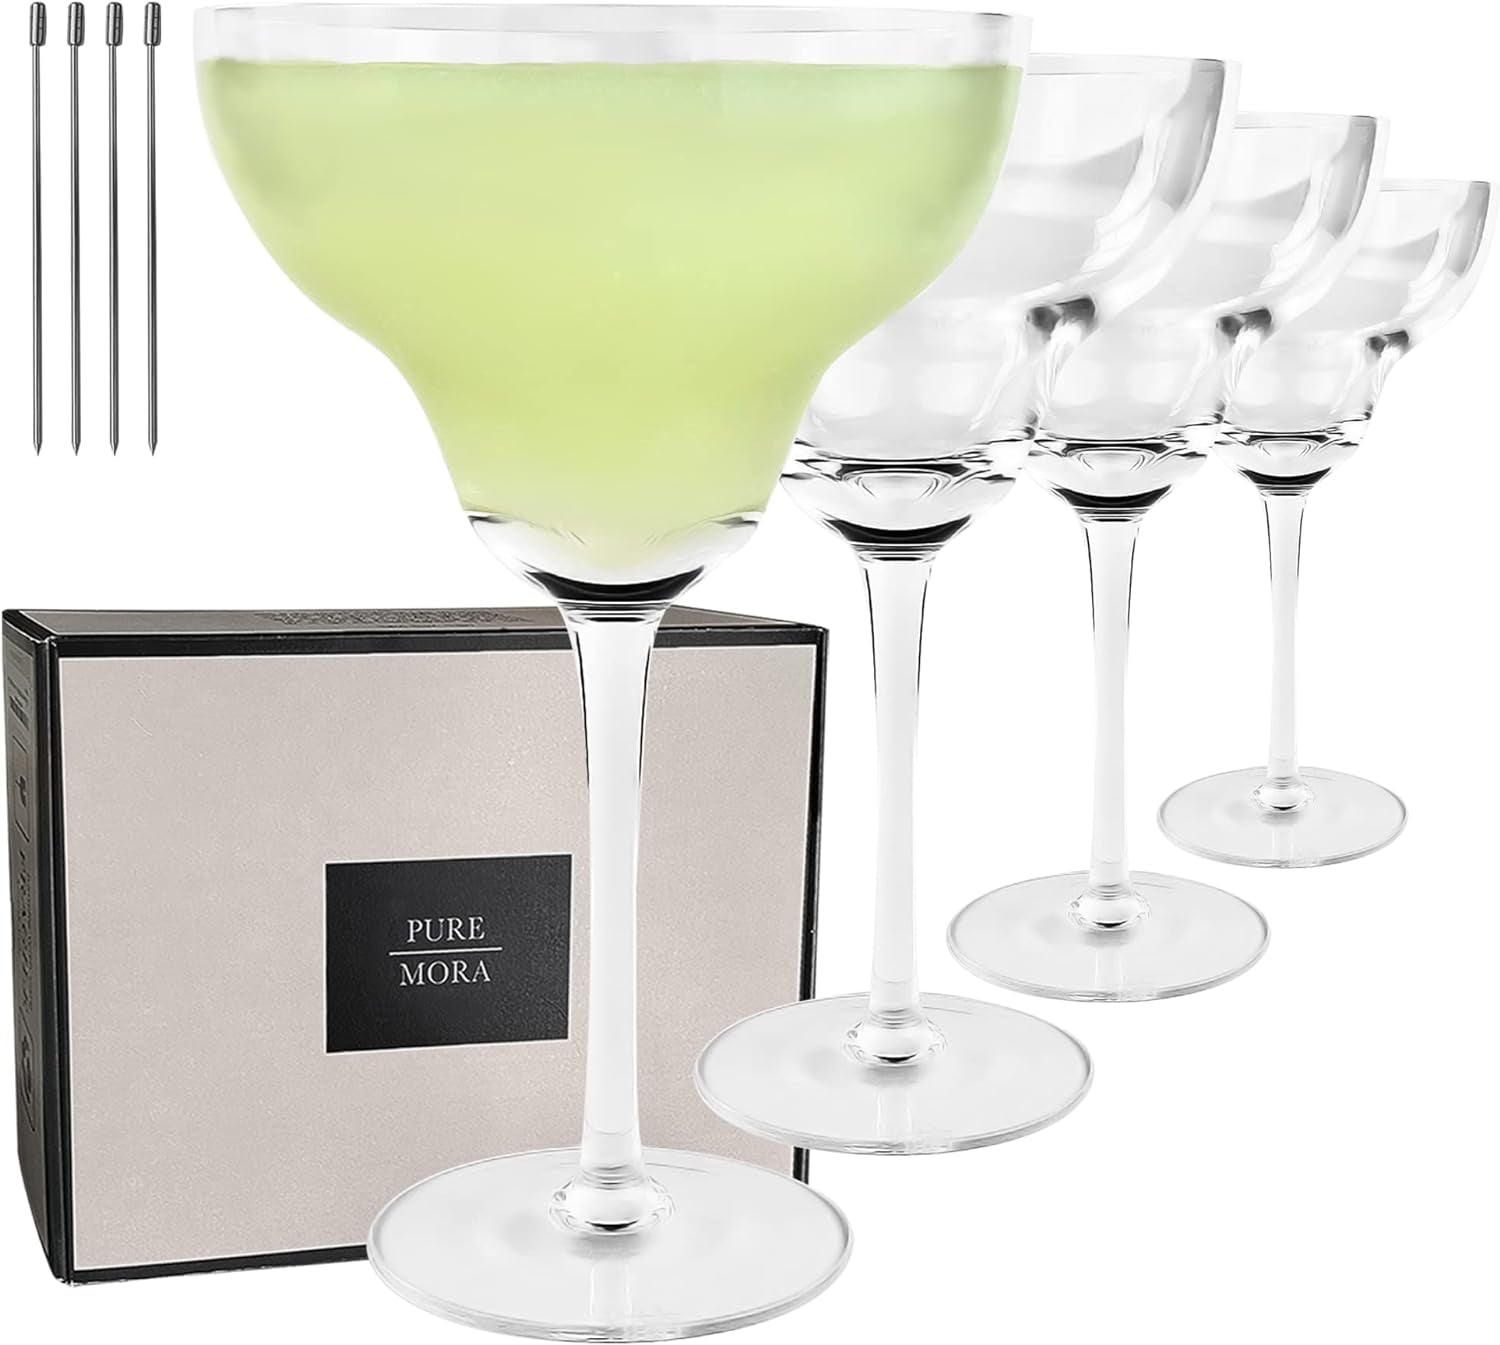 RorAem Coupe Glass Martini Glasses Set of 4 - Hand